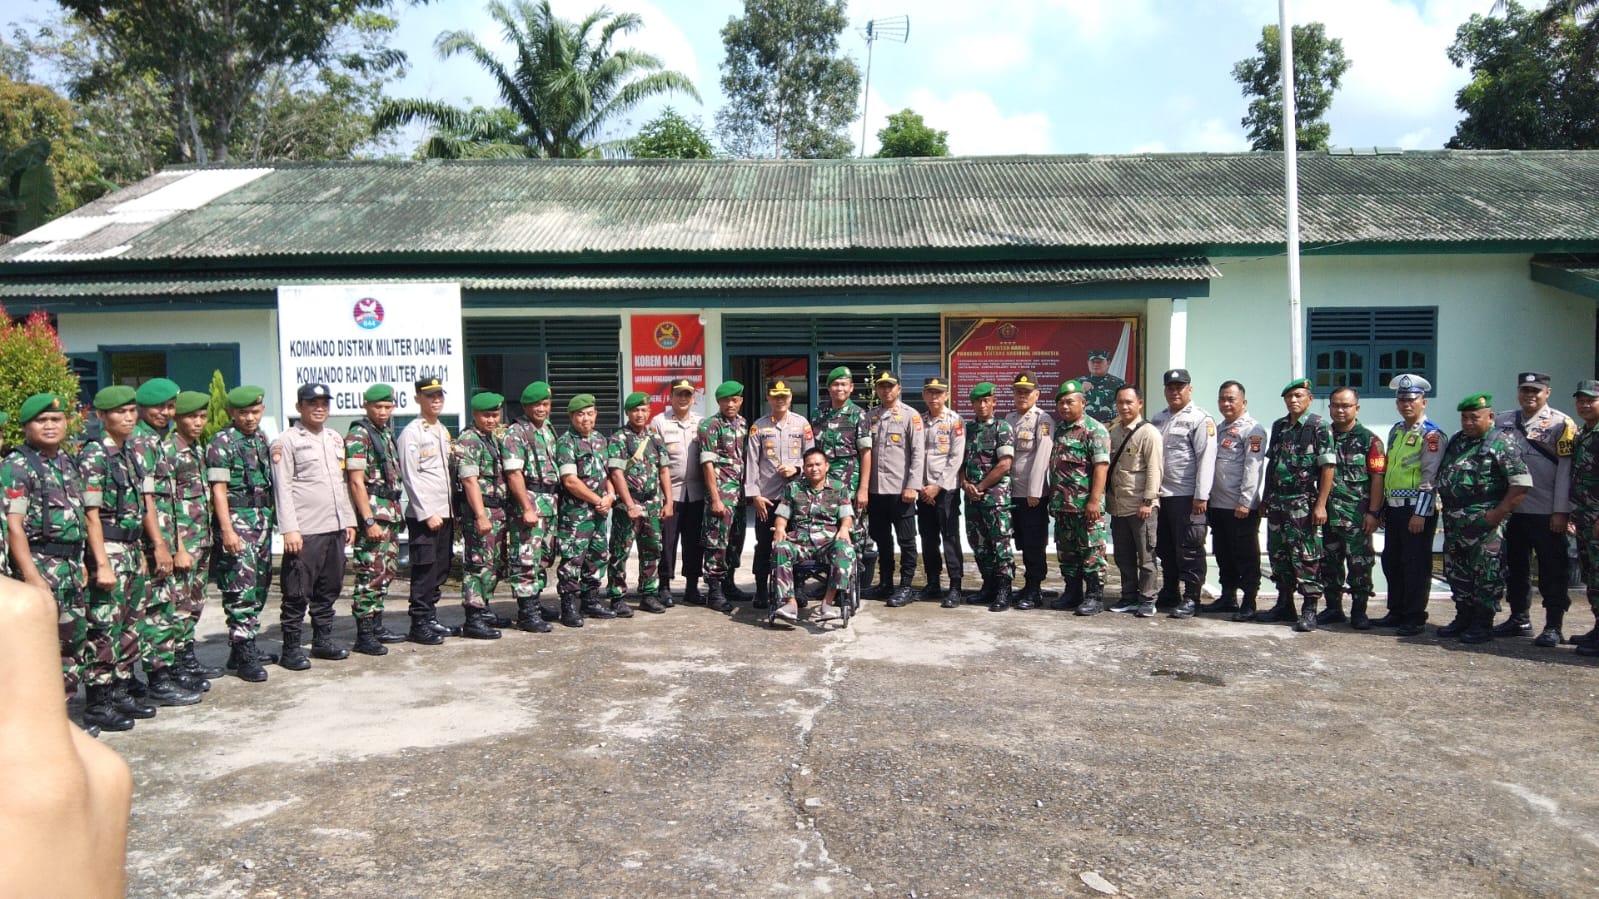 Kapolres Muara Enim Sambangi Koramil 0404/01, Jalin Silaturahmi dan Menjaga Sinergitas TNI-Polri